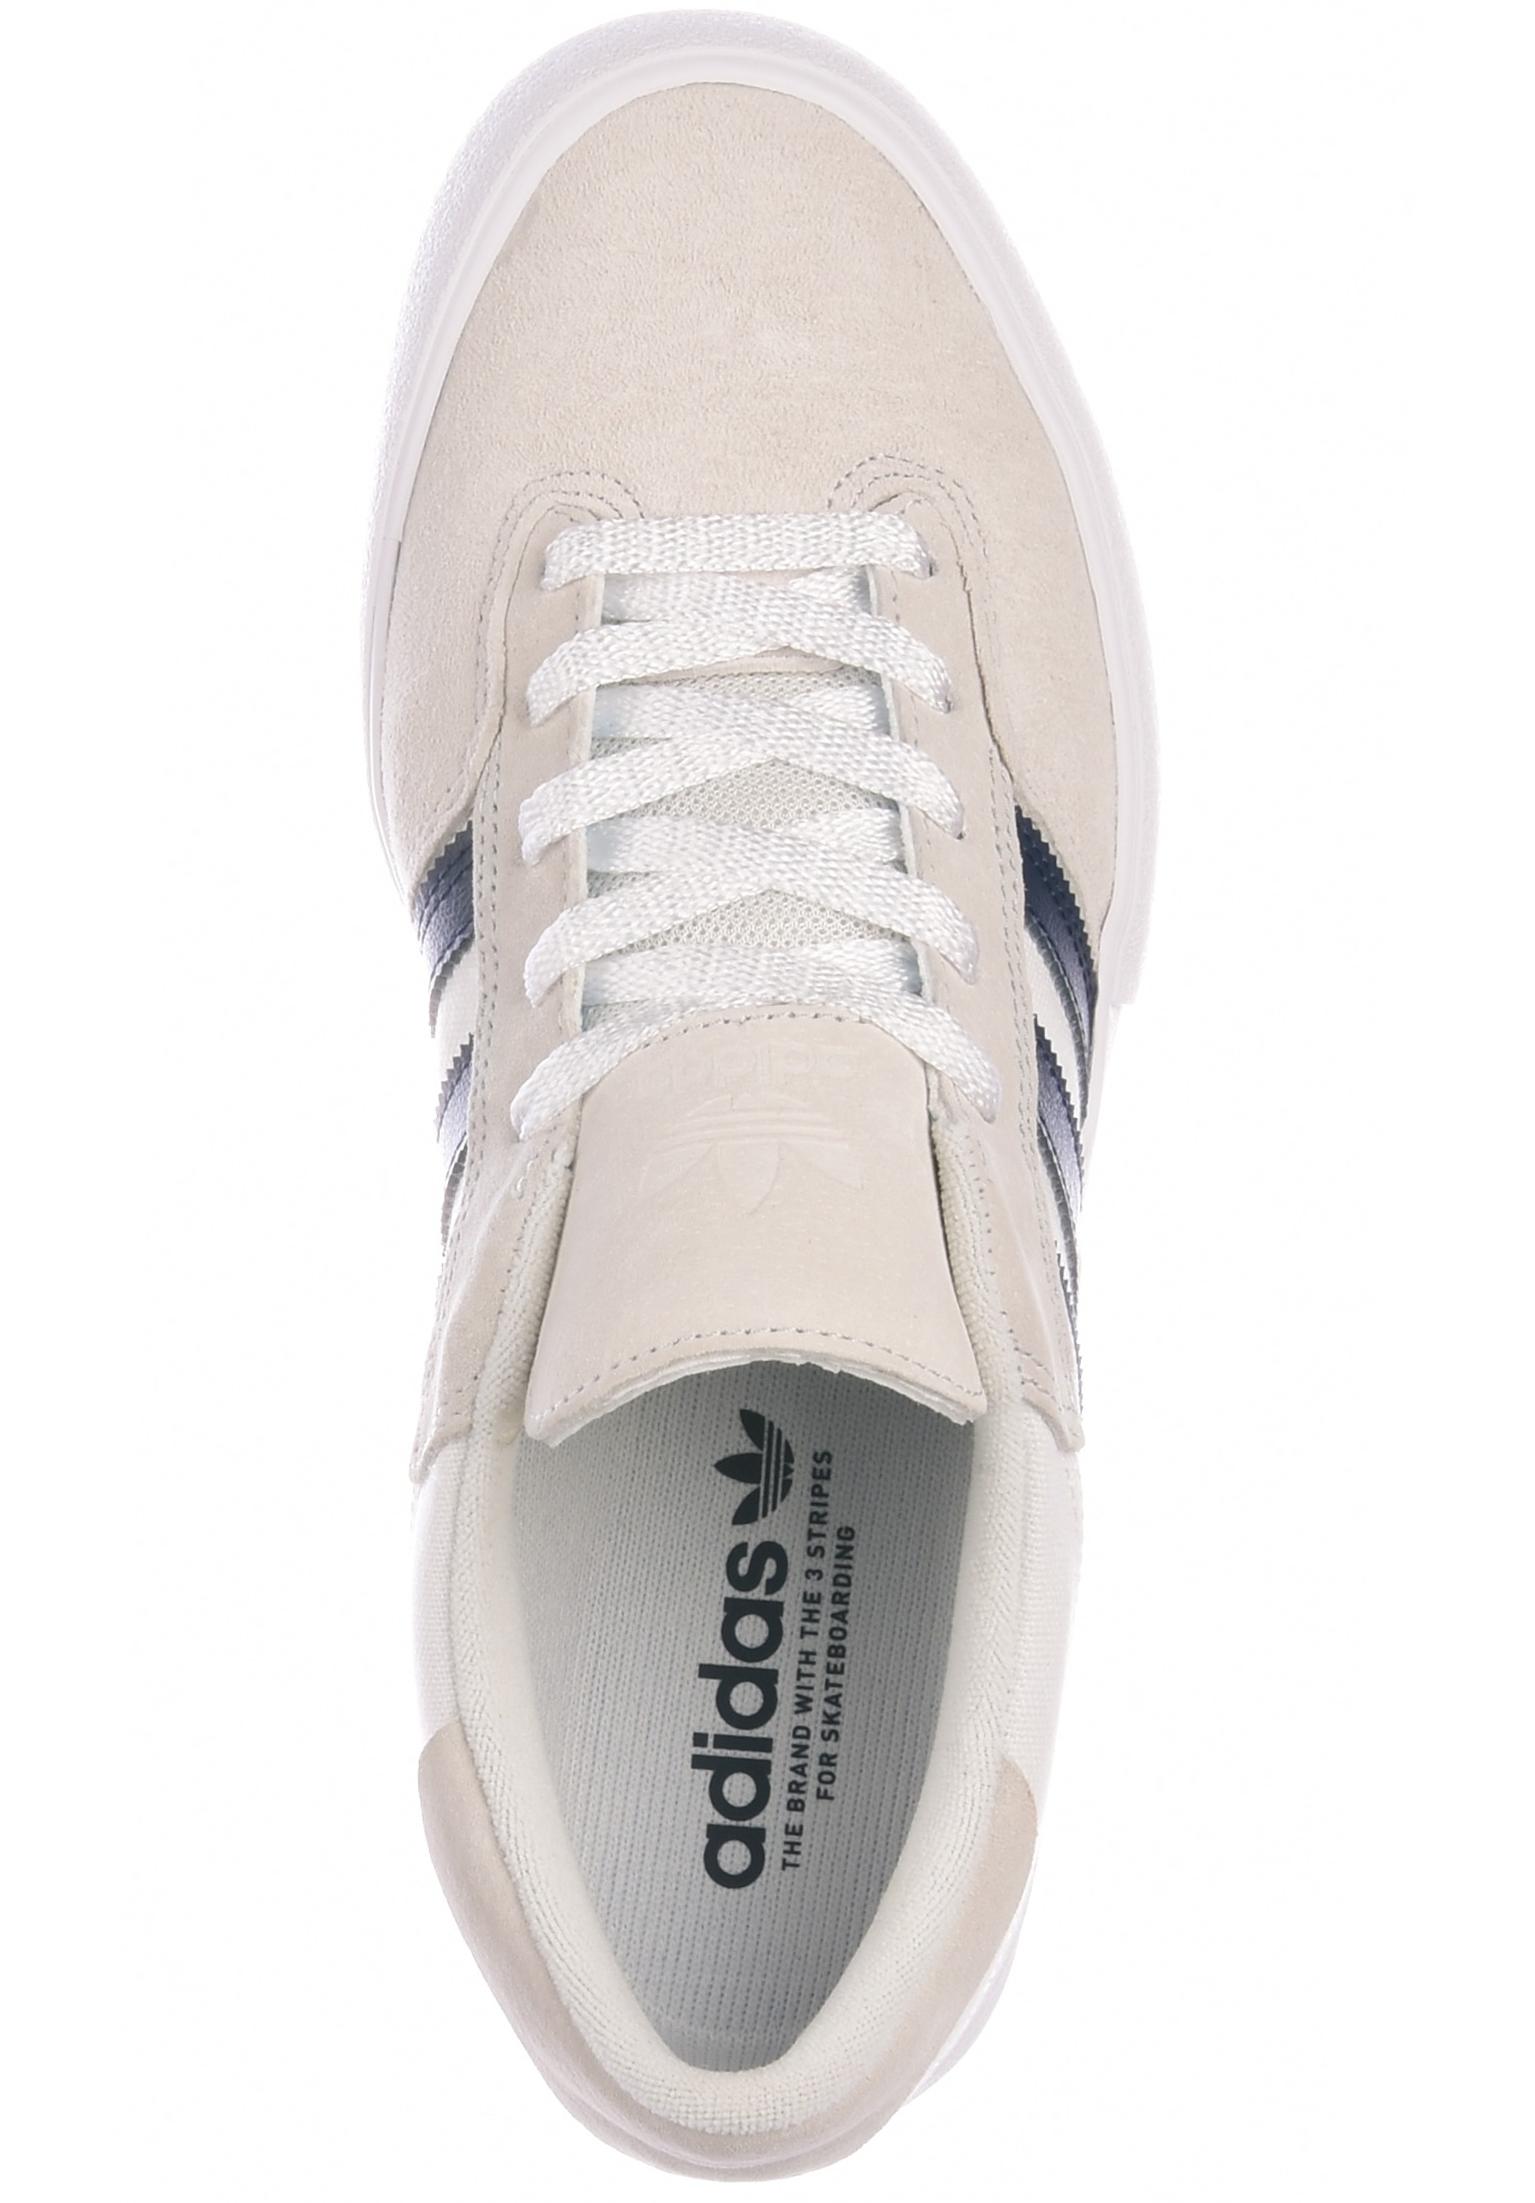 adidas-skateboarding-alle-schuhe-matchbreak-super-crystalwhite-navy-white-closeup2-0604762.jpg